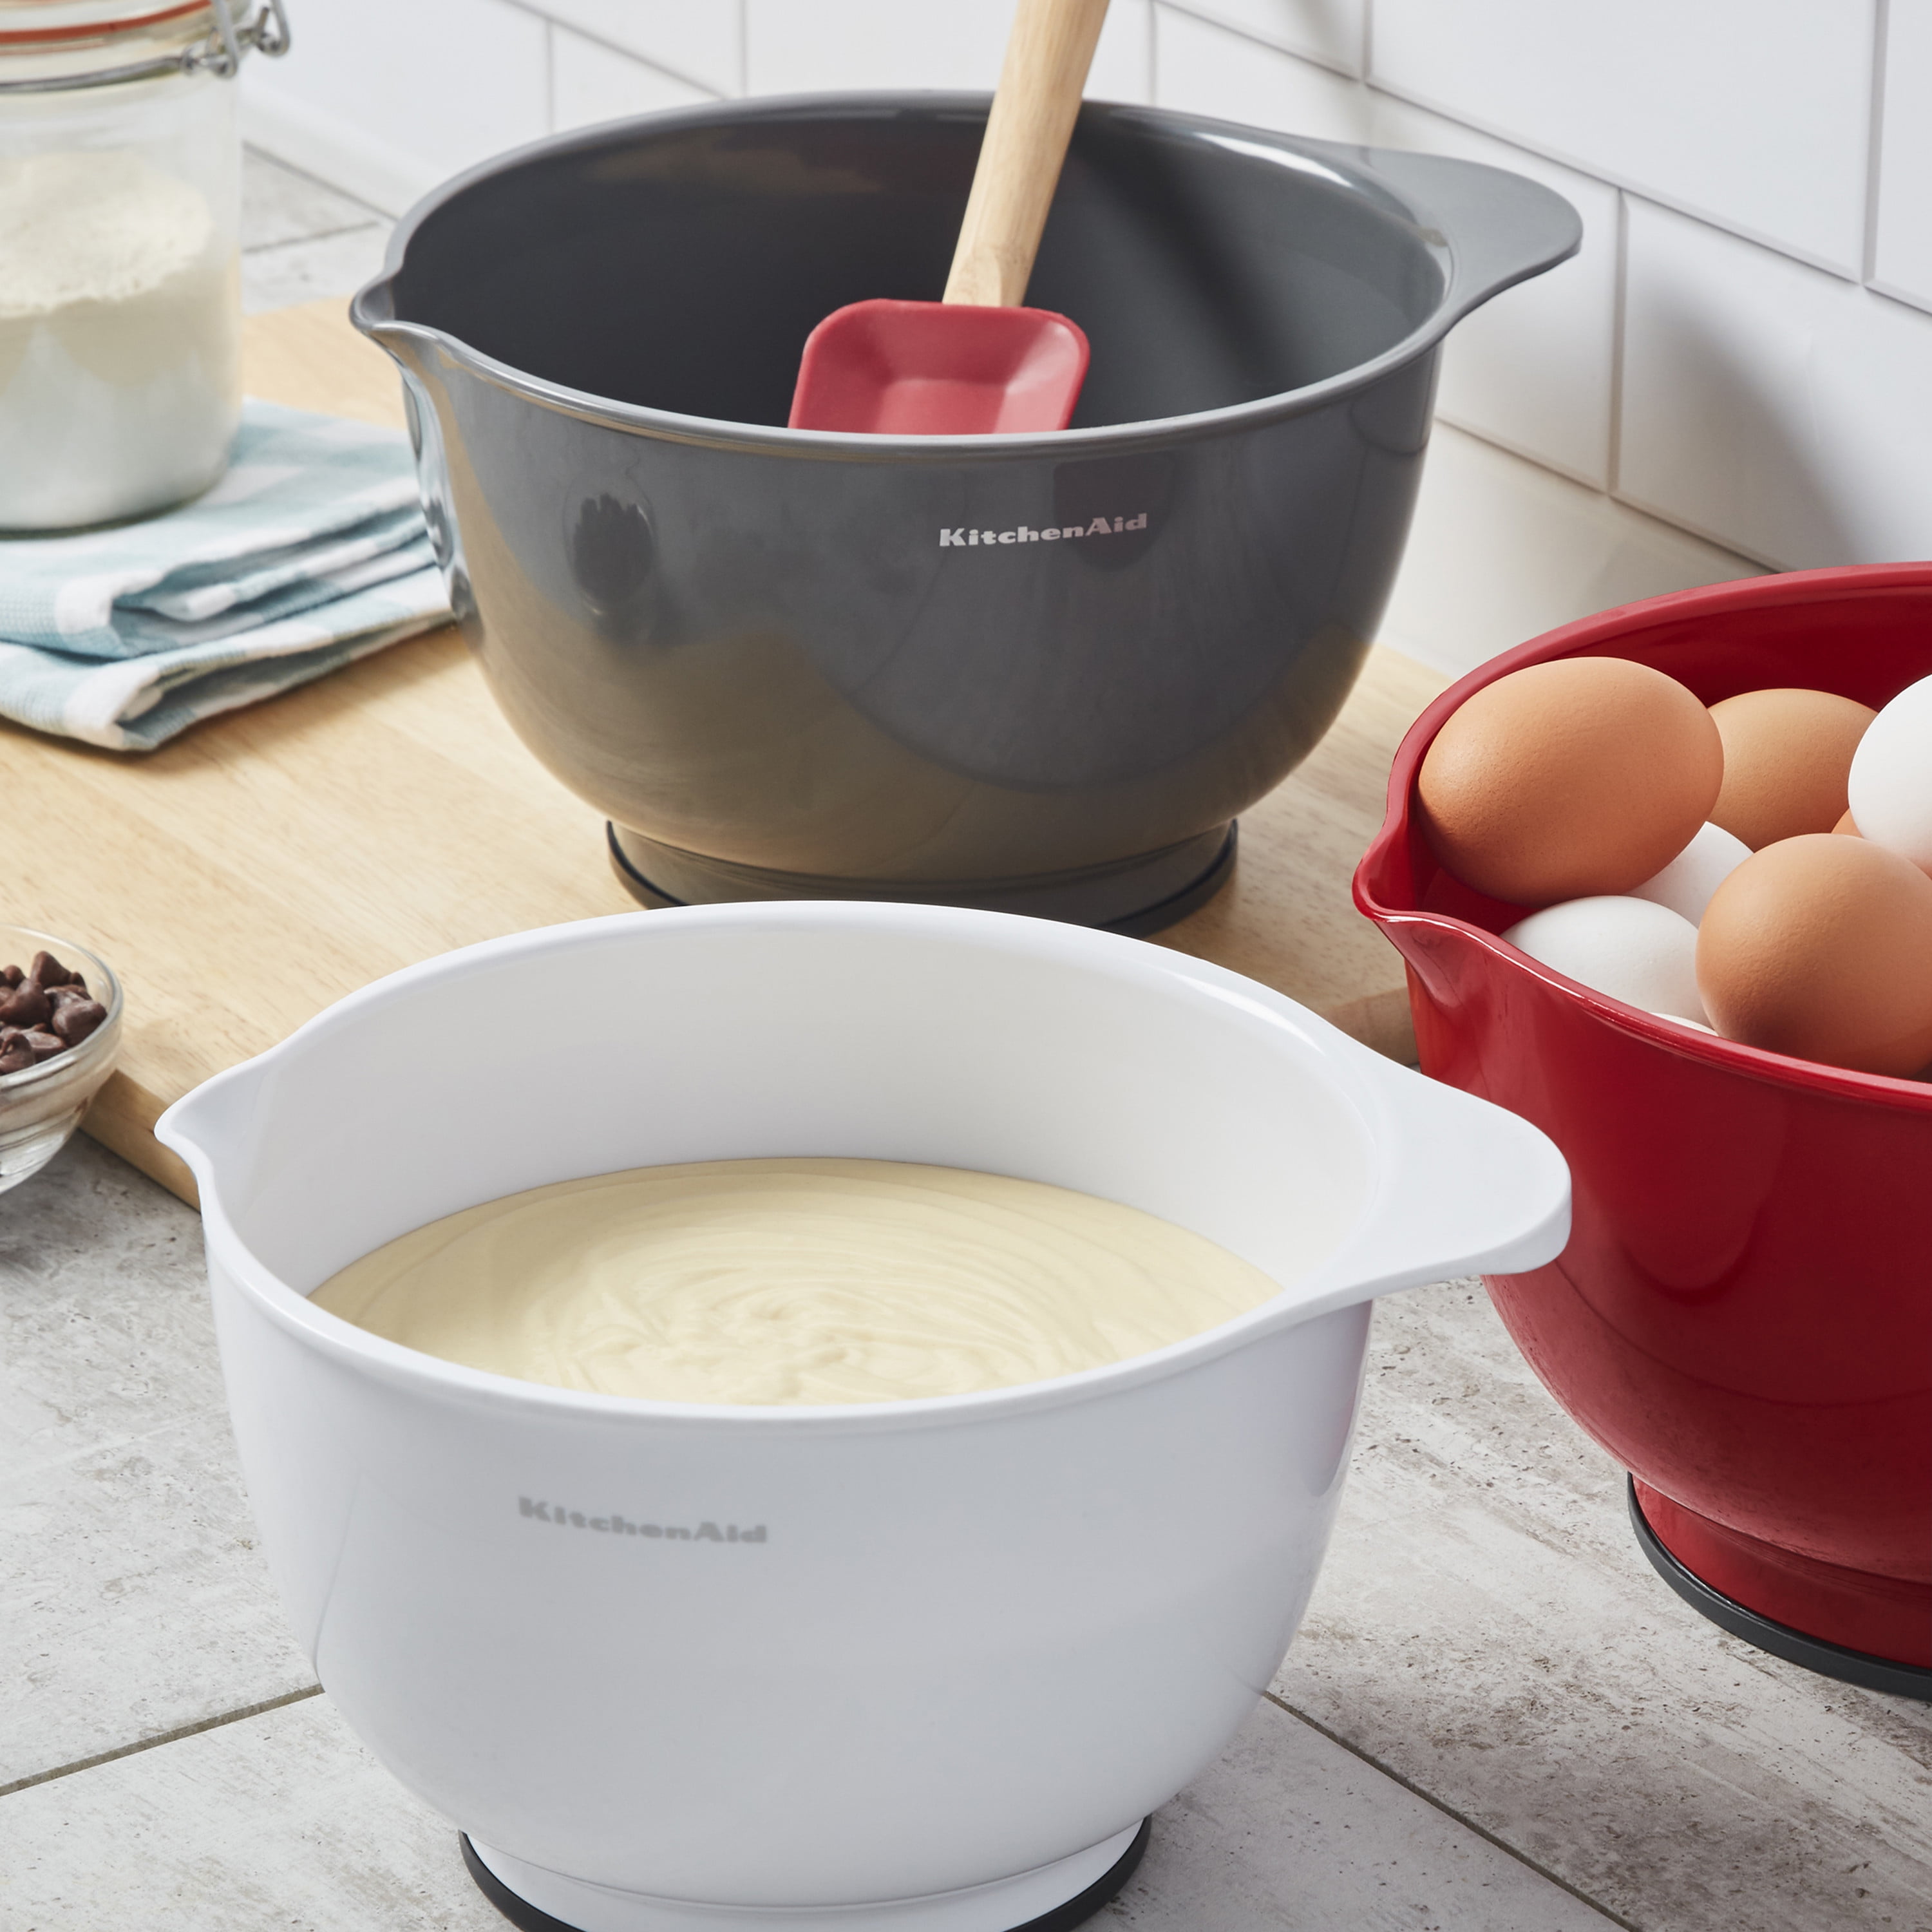 Best Buy: KitchenAid 3-Piece Mixing Bowl Set Aqua, Gray & White KQ175OSA7A